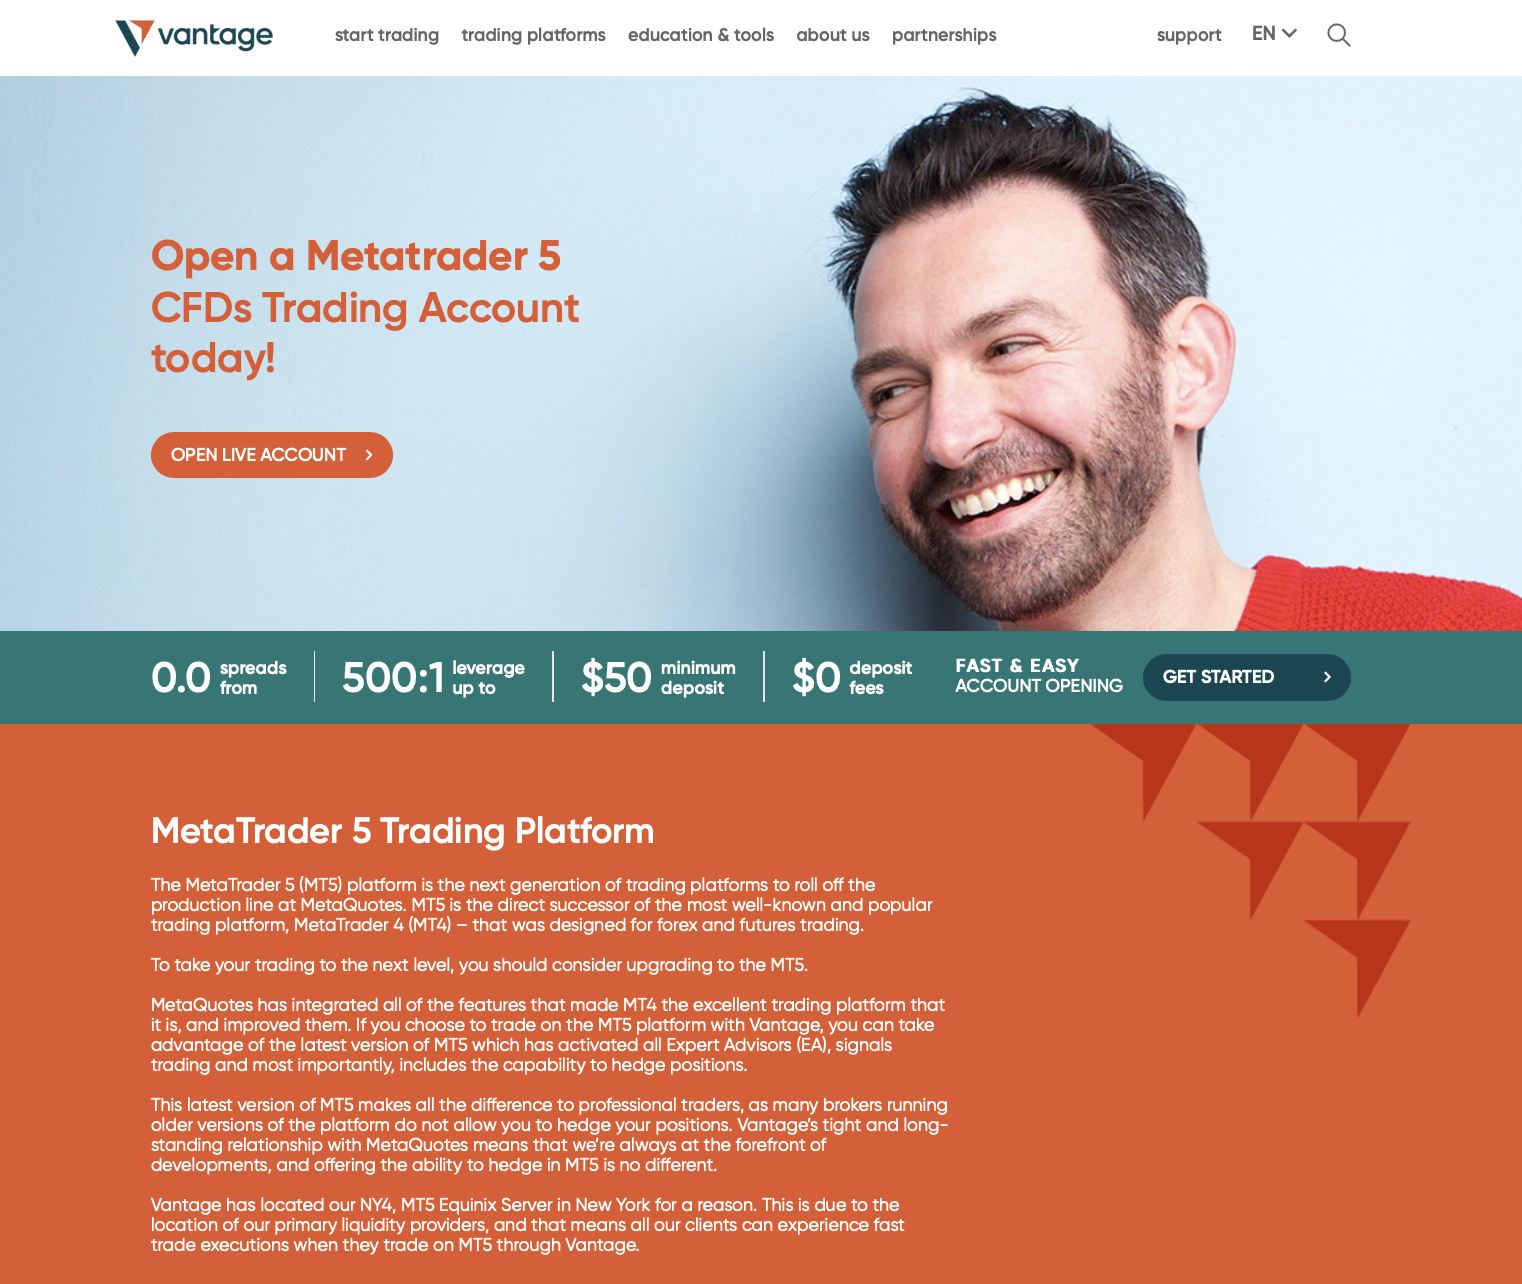 Vantage Markets official landingpage of the MetaTrader 5 offer